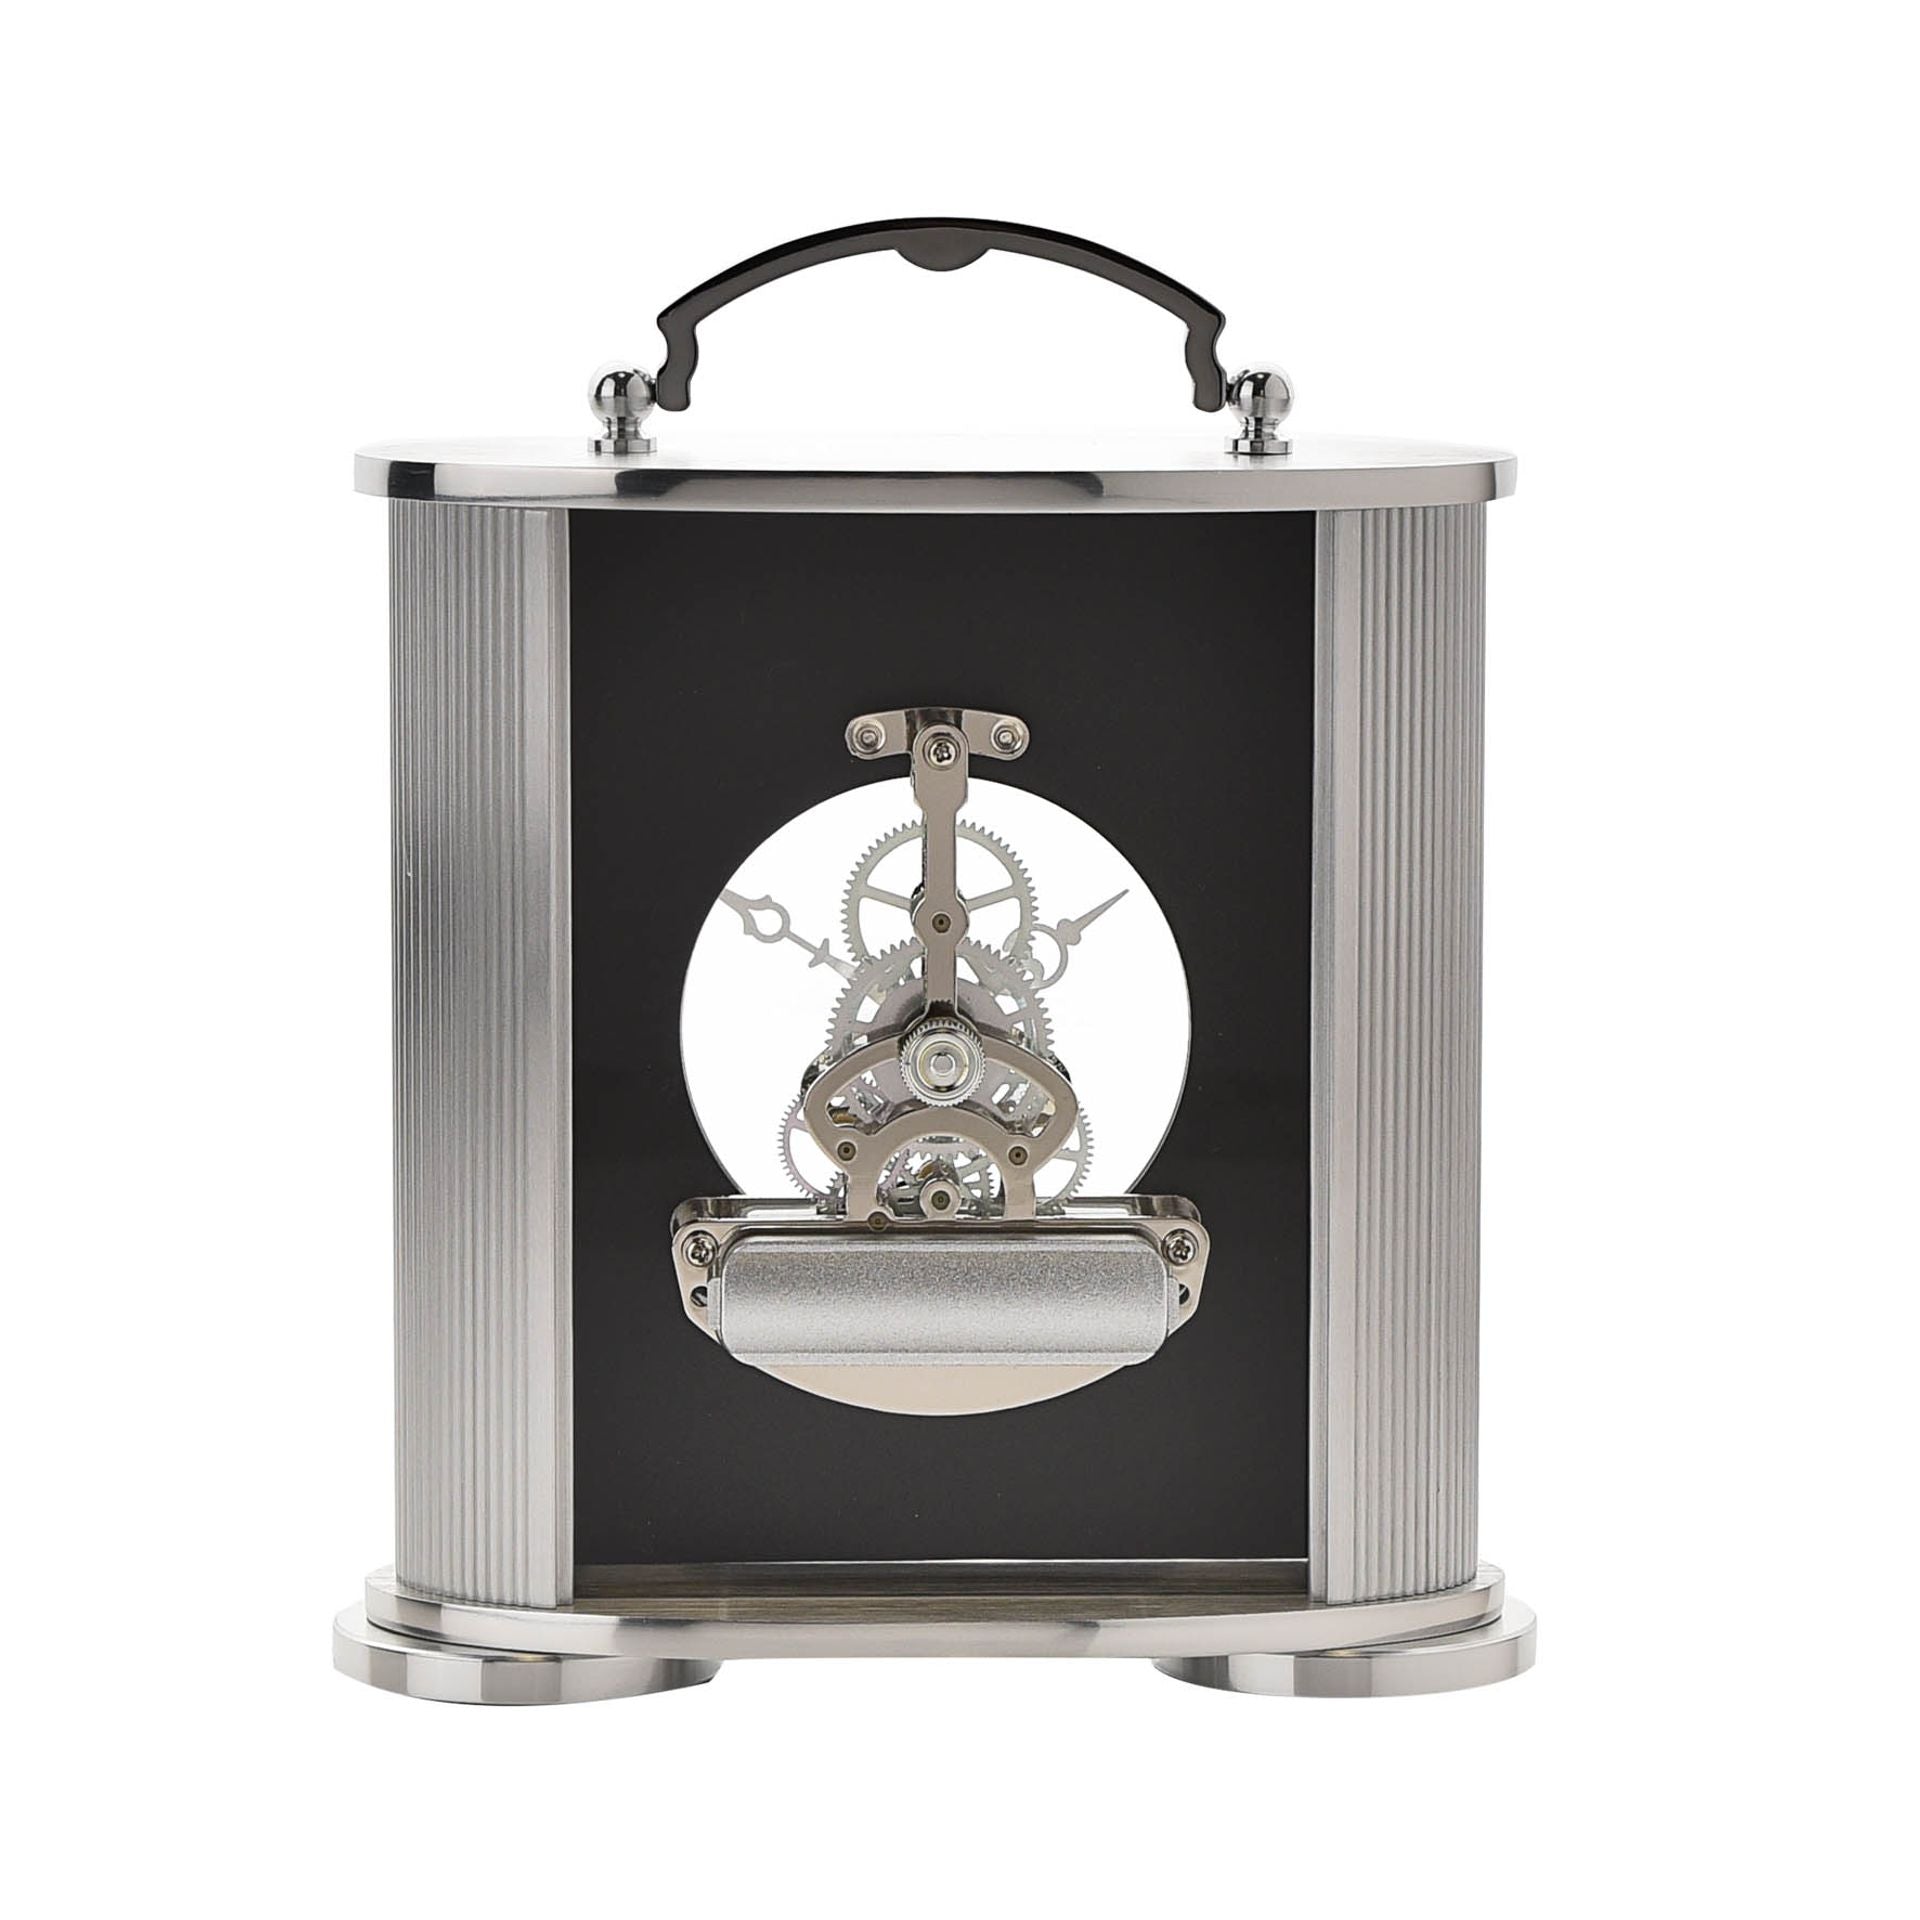 WM. Widdop Brushed Silver and Black Aluminium Carriage Clock